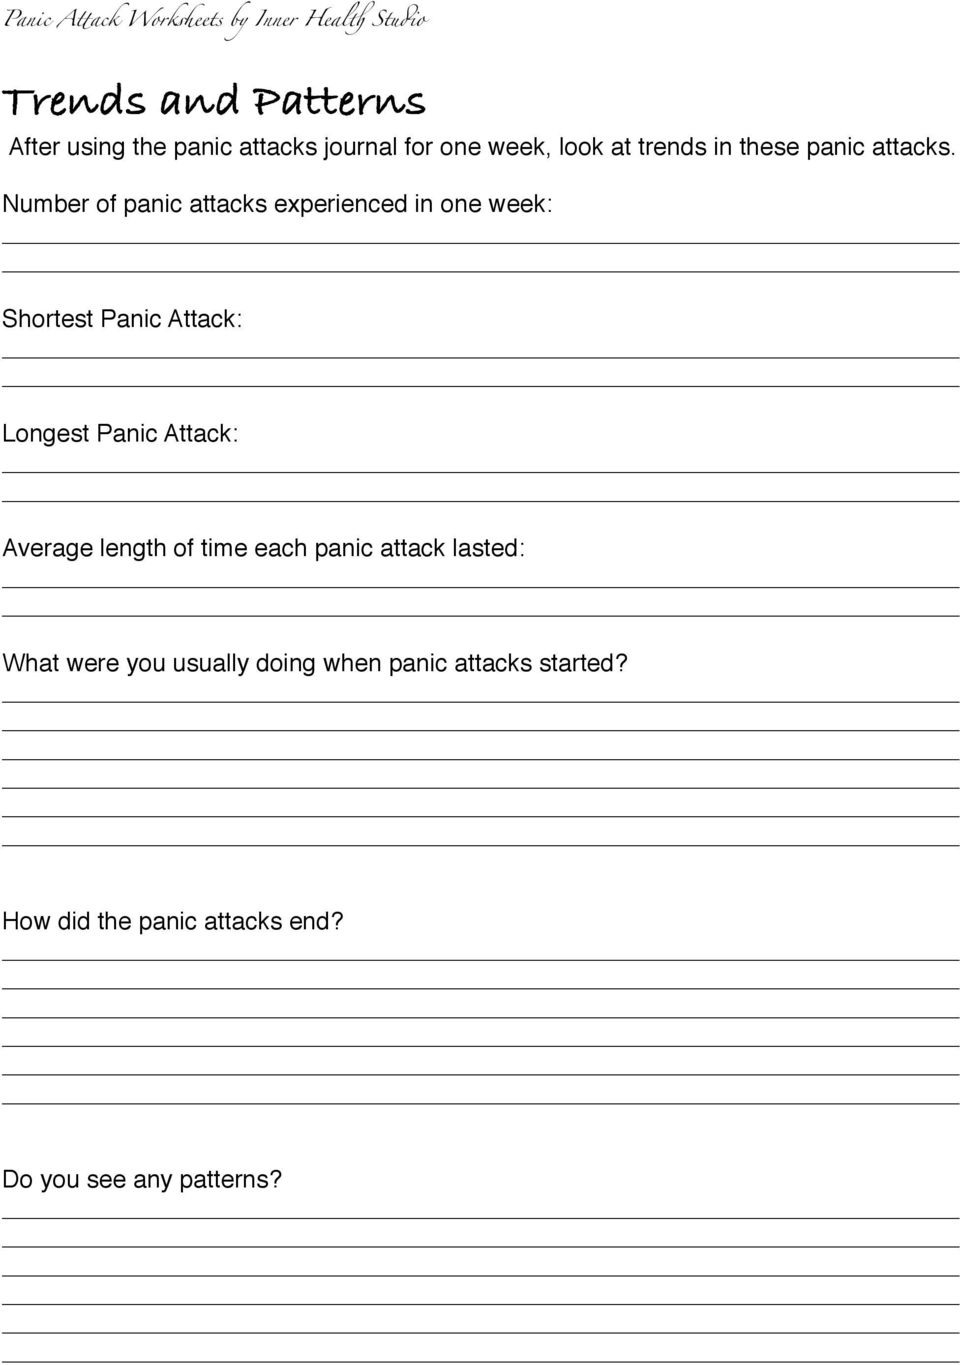 Panic Attack Worksheets  Pdf